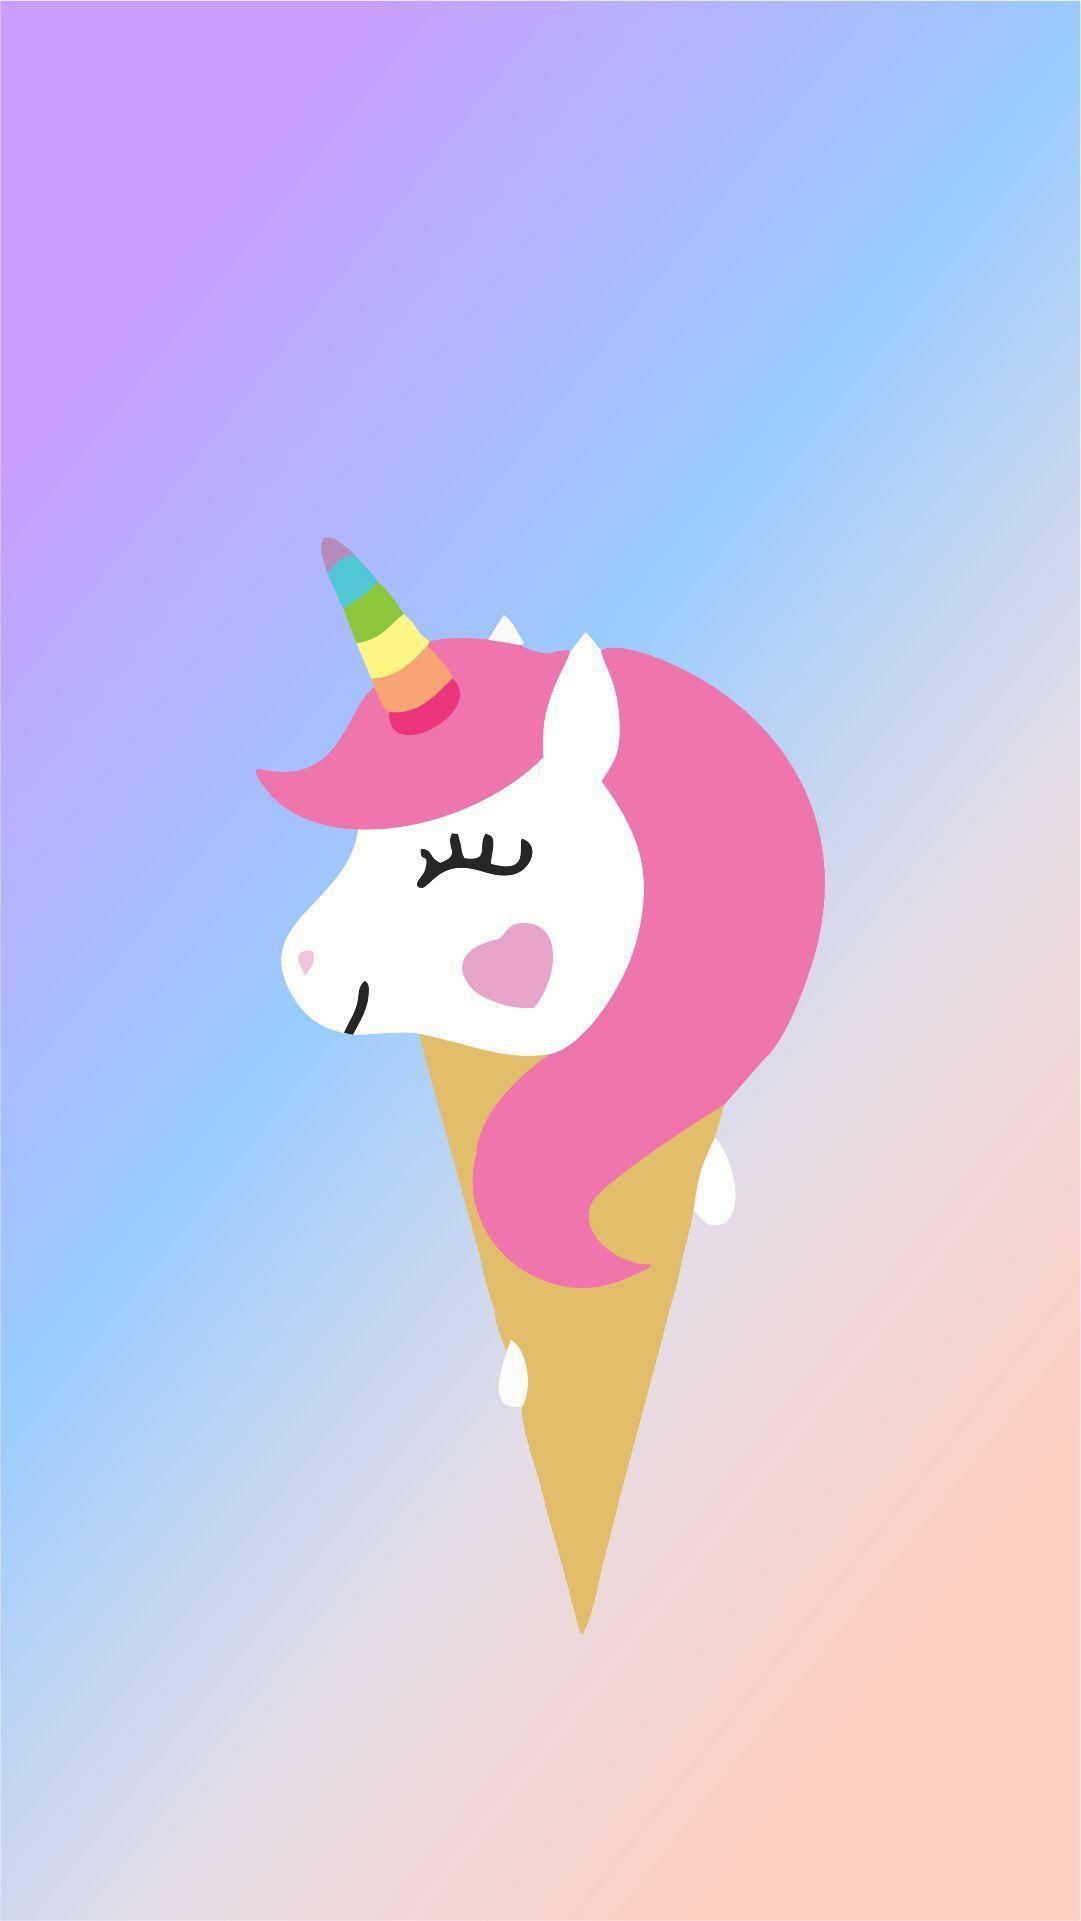 icecream unicorn wallpaper. Everything Unicorns